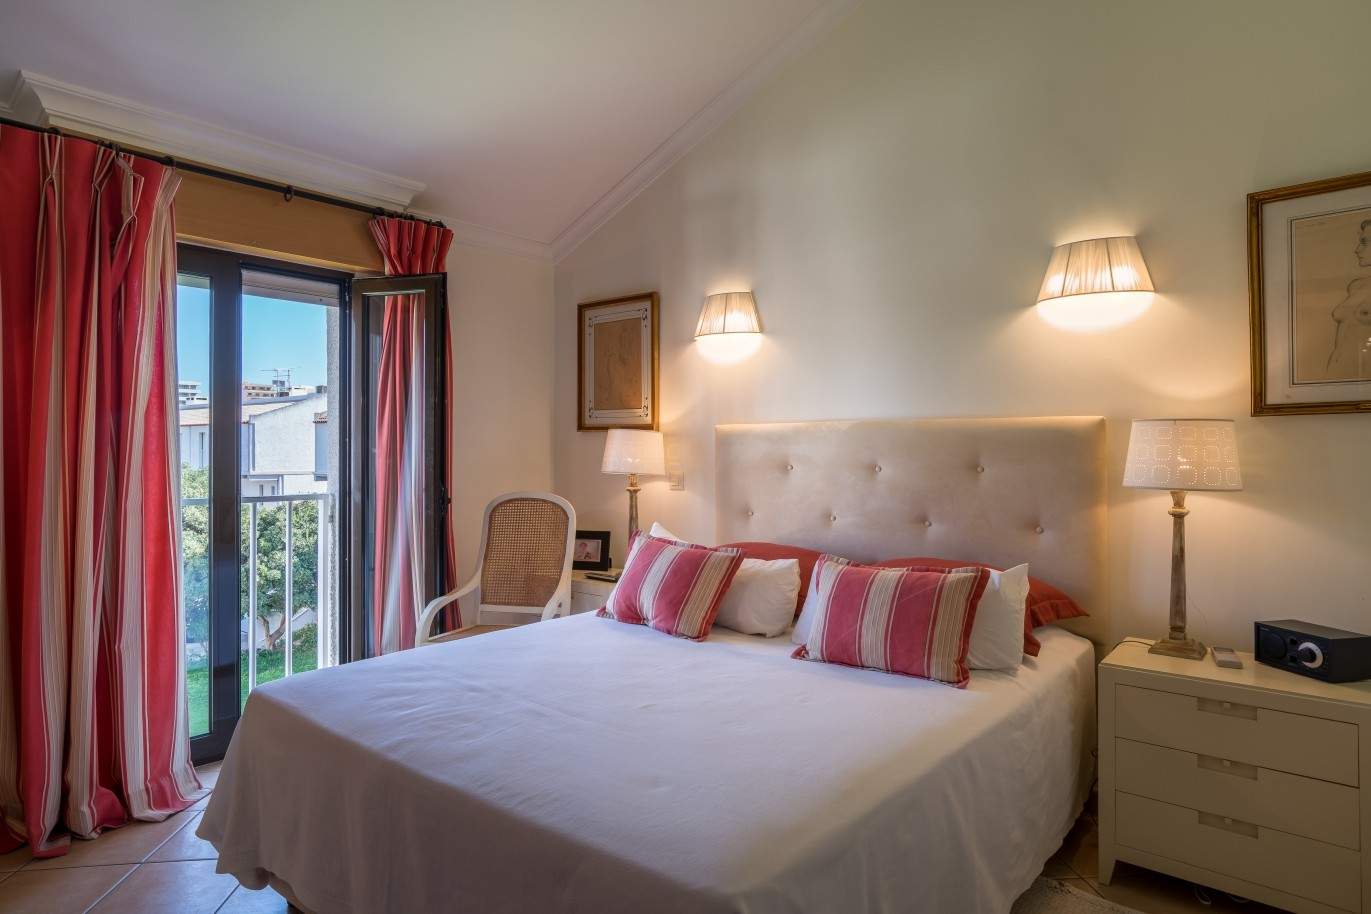 Apartment-triplex zum Verkauf in der Nähe zum Strand, Marina Vilamoura, Algarve, Portugal_67802